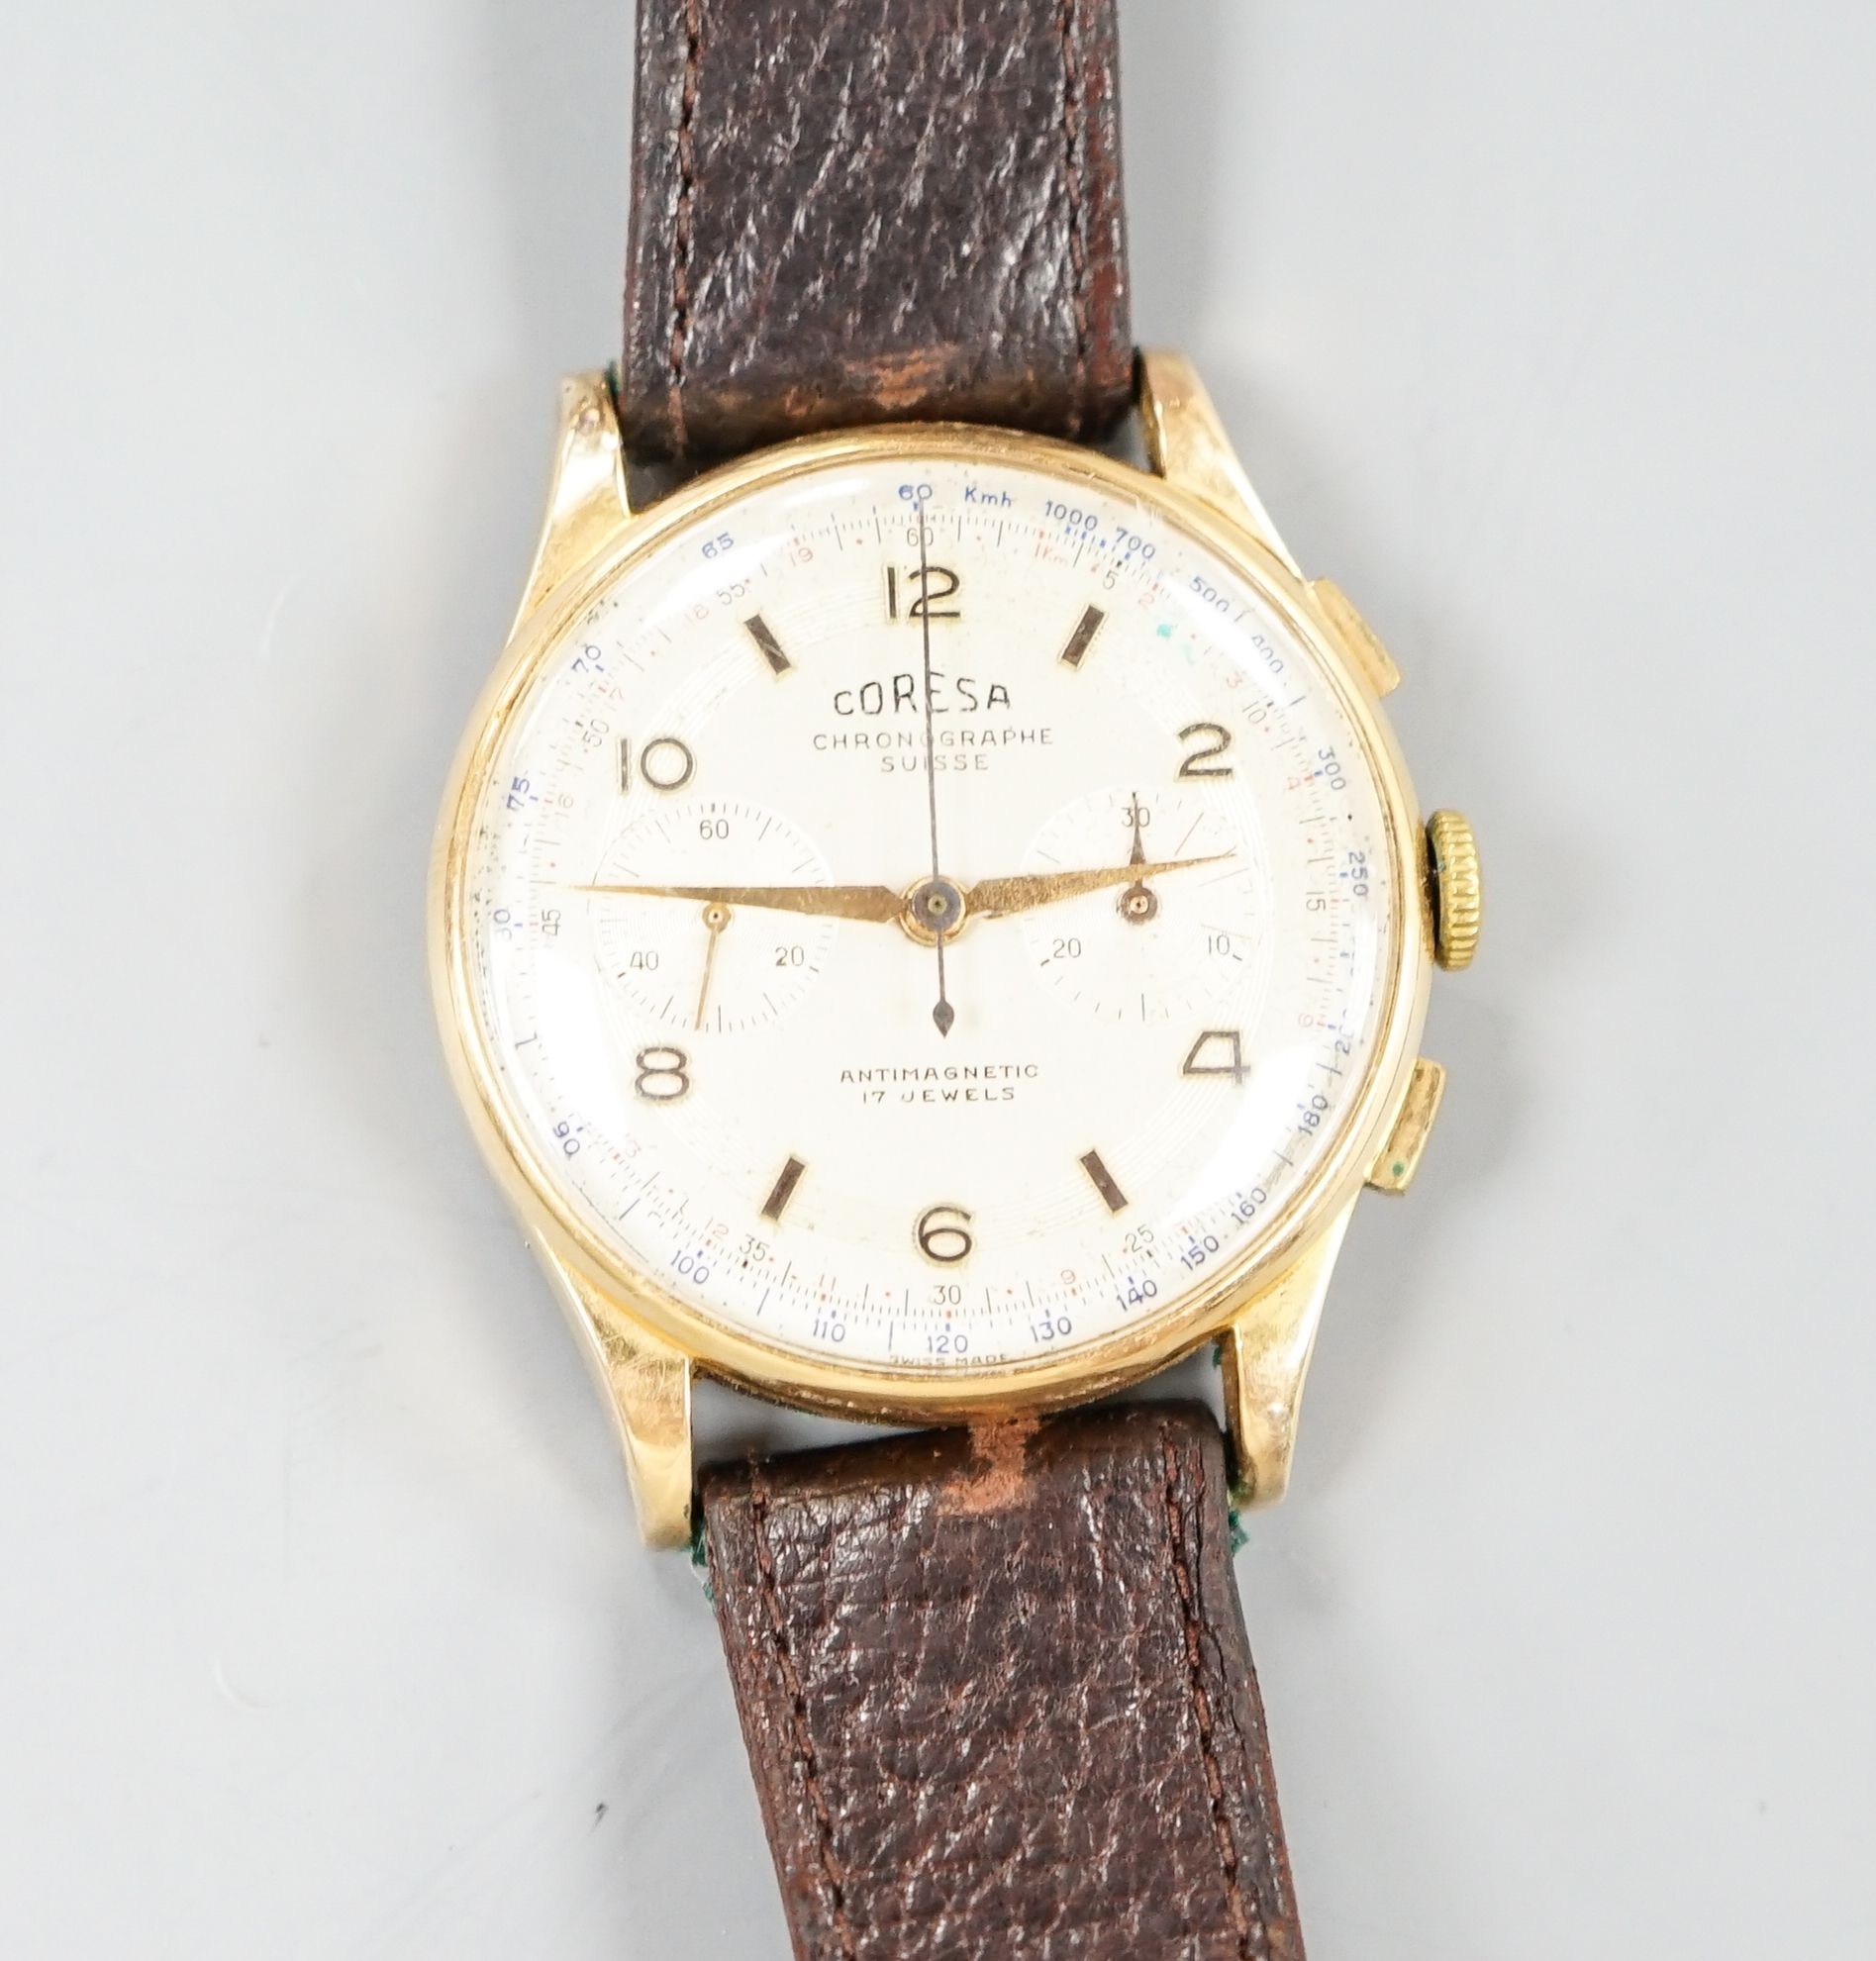 A gentleman's Swiss yellow metal Coresa manual wind chronograph wrist watch (back missing), case diameter 37mm, on associated leather45.2 grams, strap, gross weight